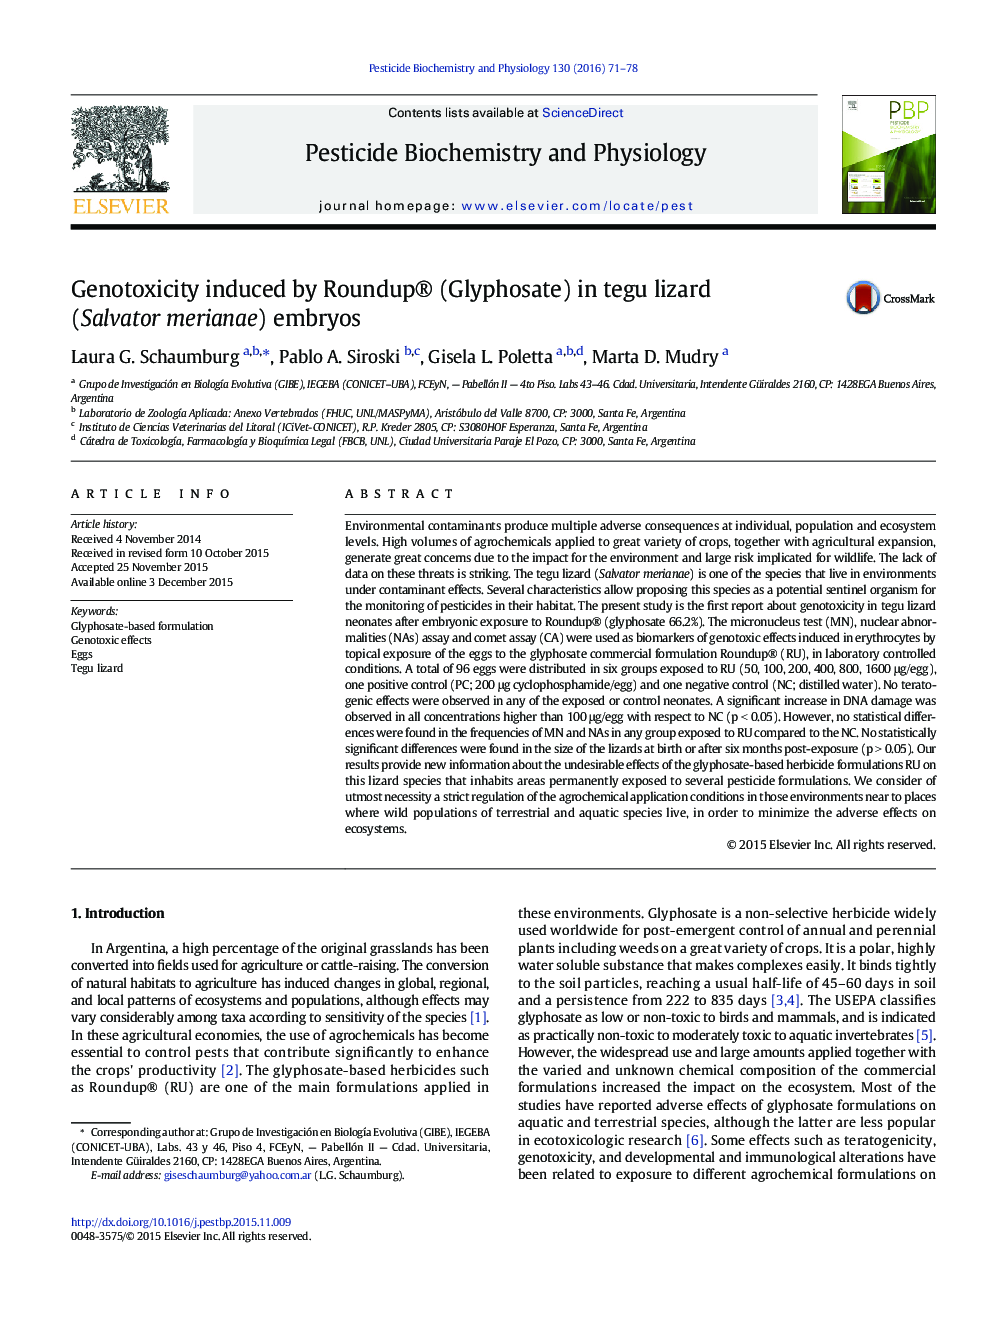 Genotoxicity induced by Roundup® (Glyphosate) in tegu lizard (Salvator merianae) embryos